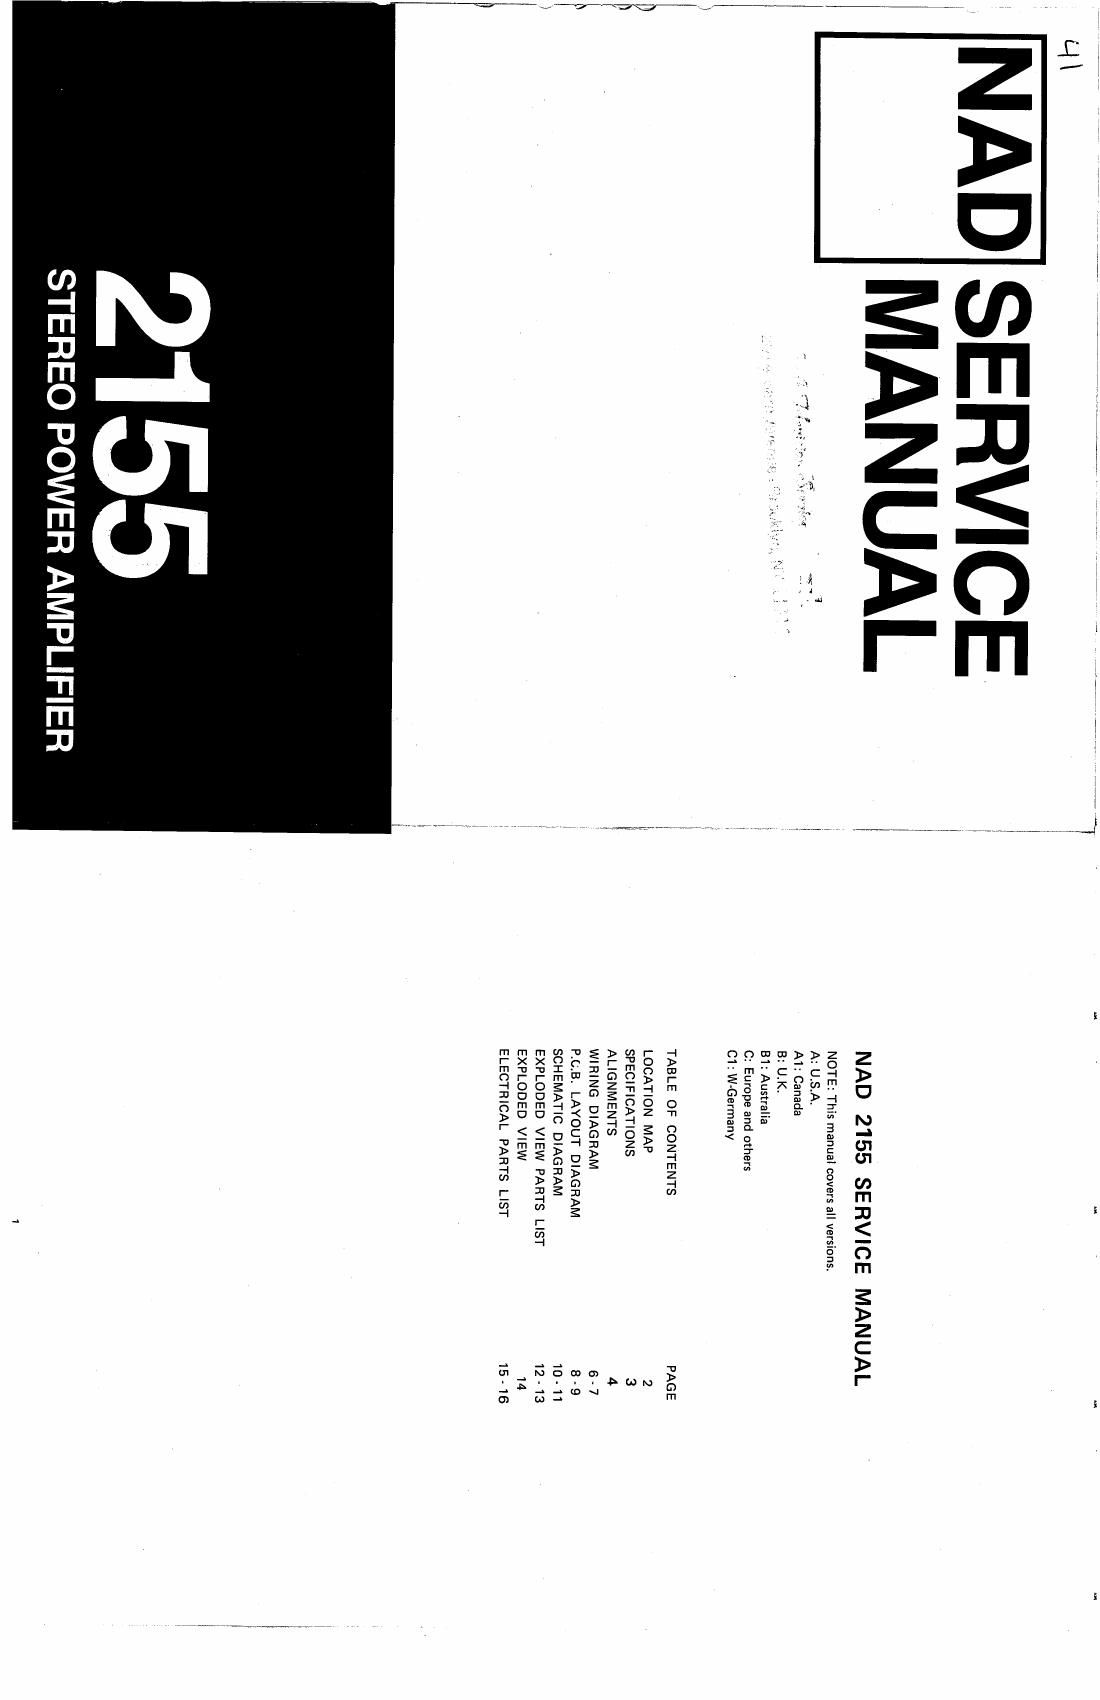 Nad 2155 Service Manual 2